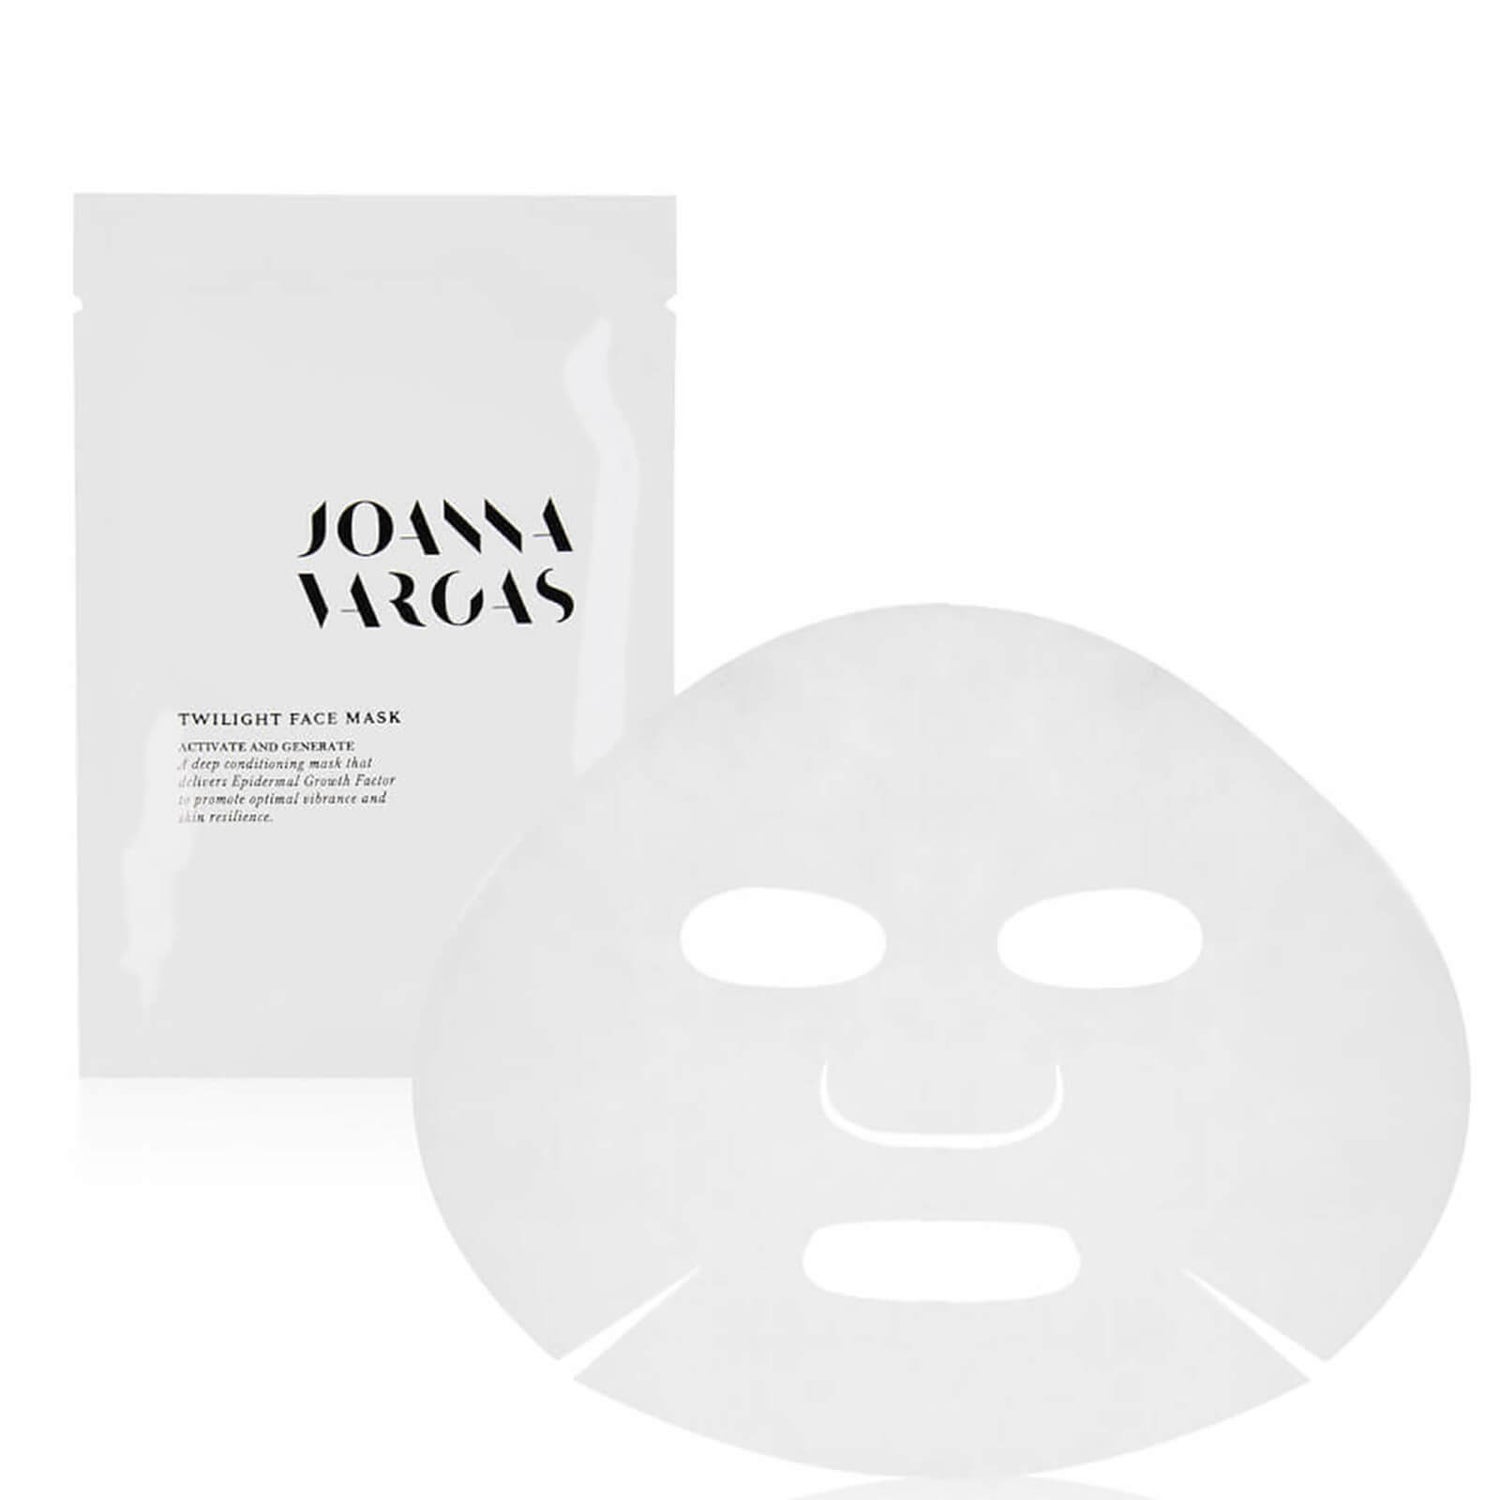 Joanna Vargas Twilight Sheet Mask (1 Sheet)